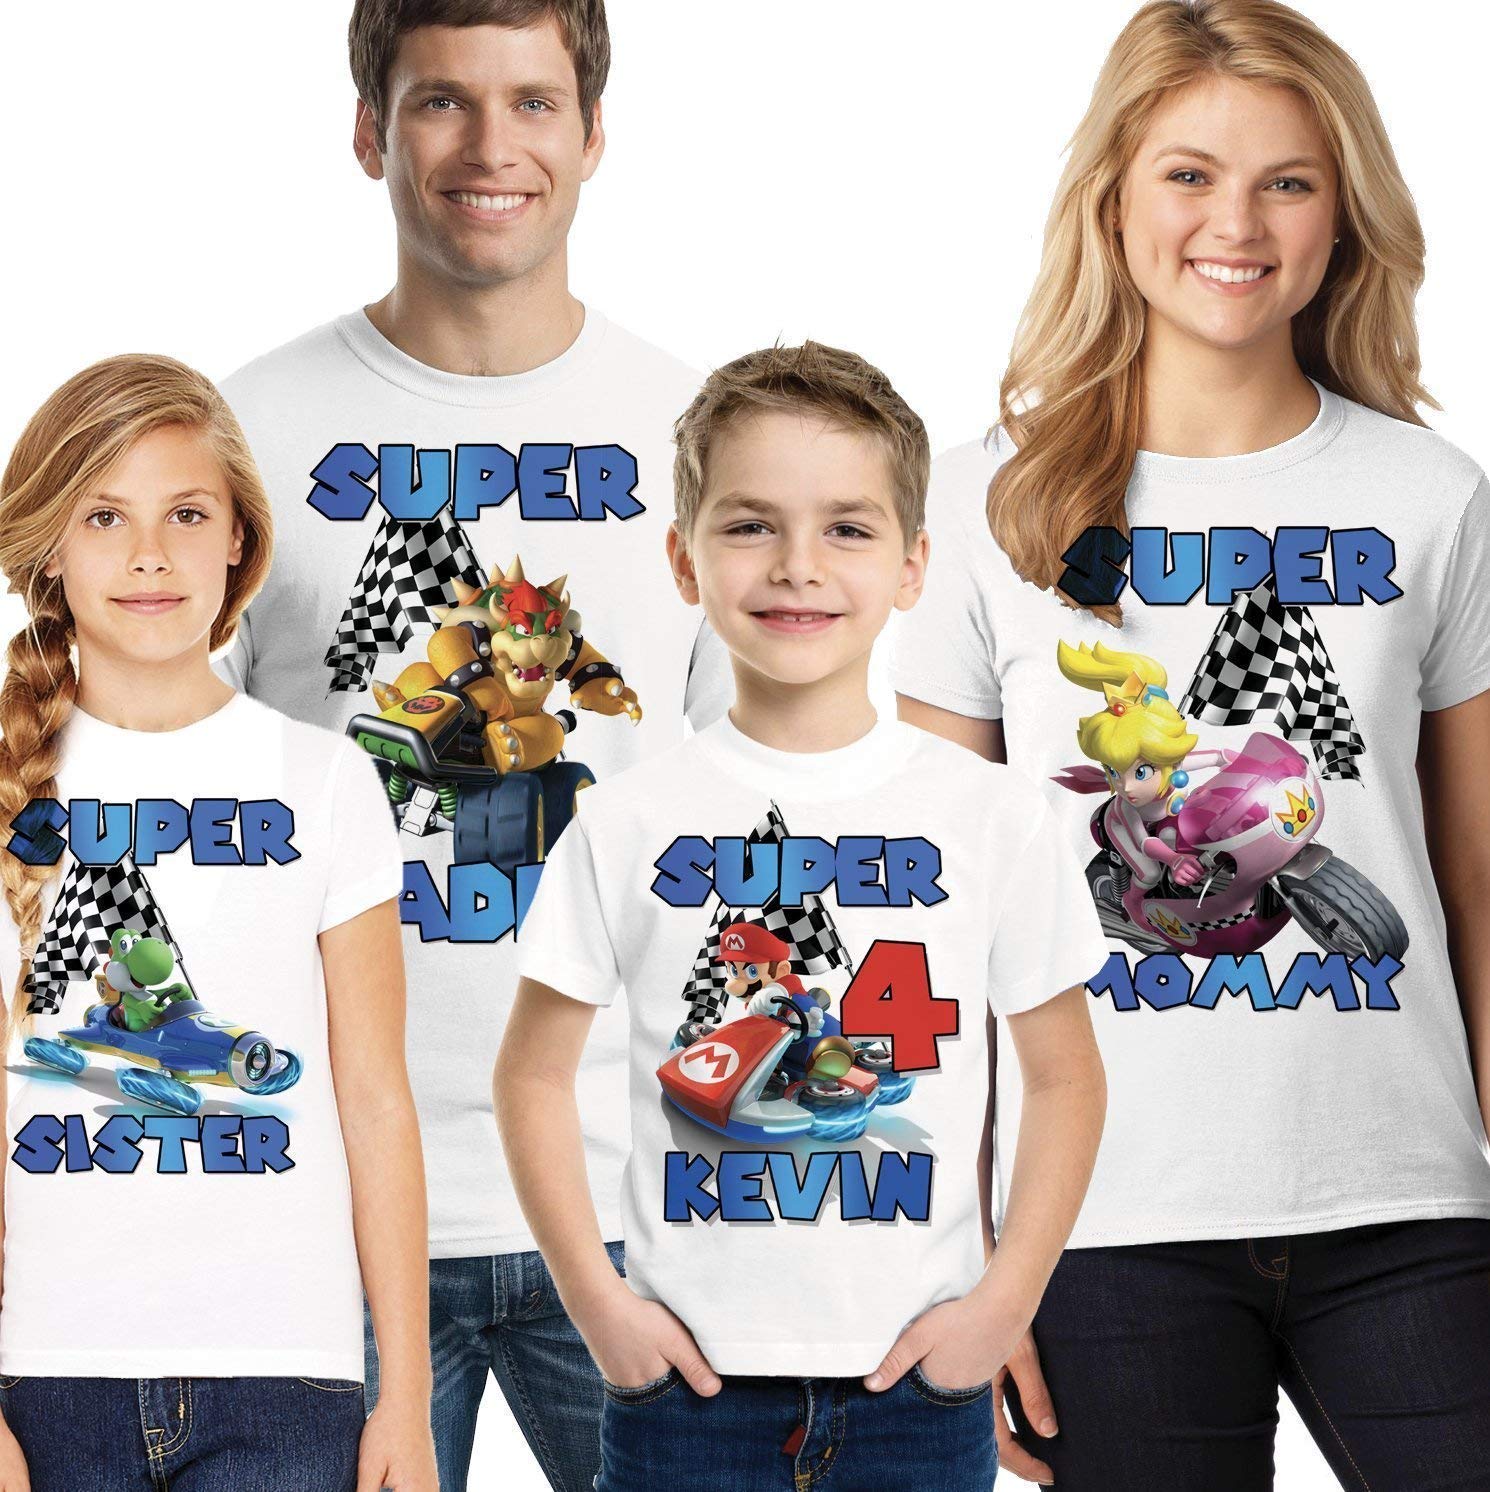 Mario Kart birthday shirt, Mario Kart Shirt, Super Mario kart party shirts